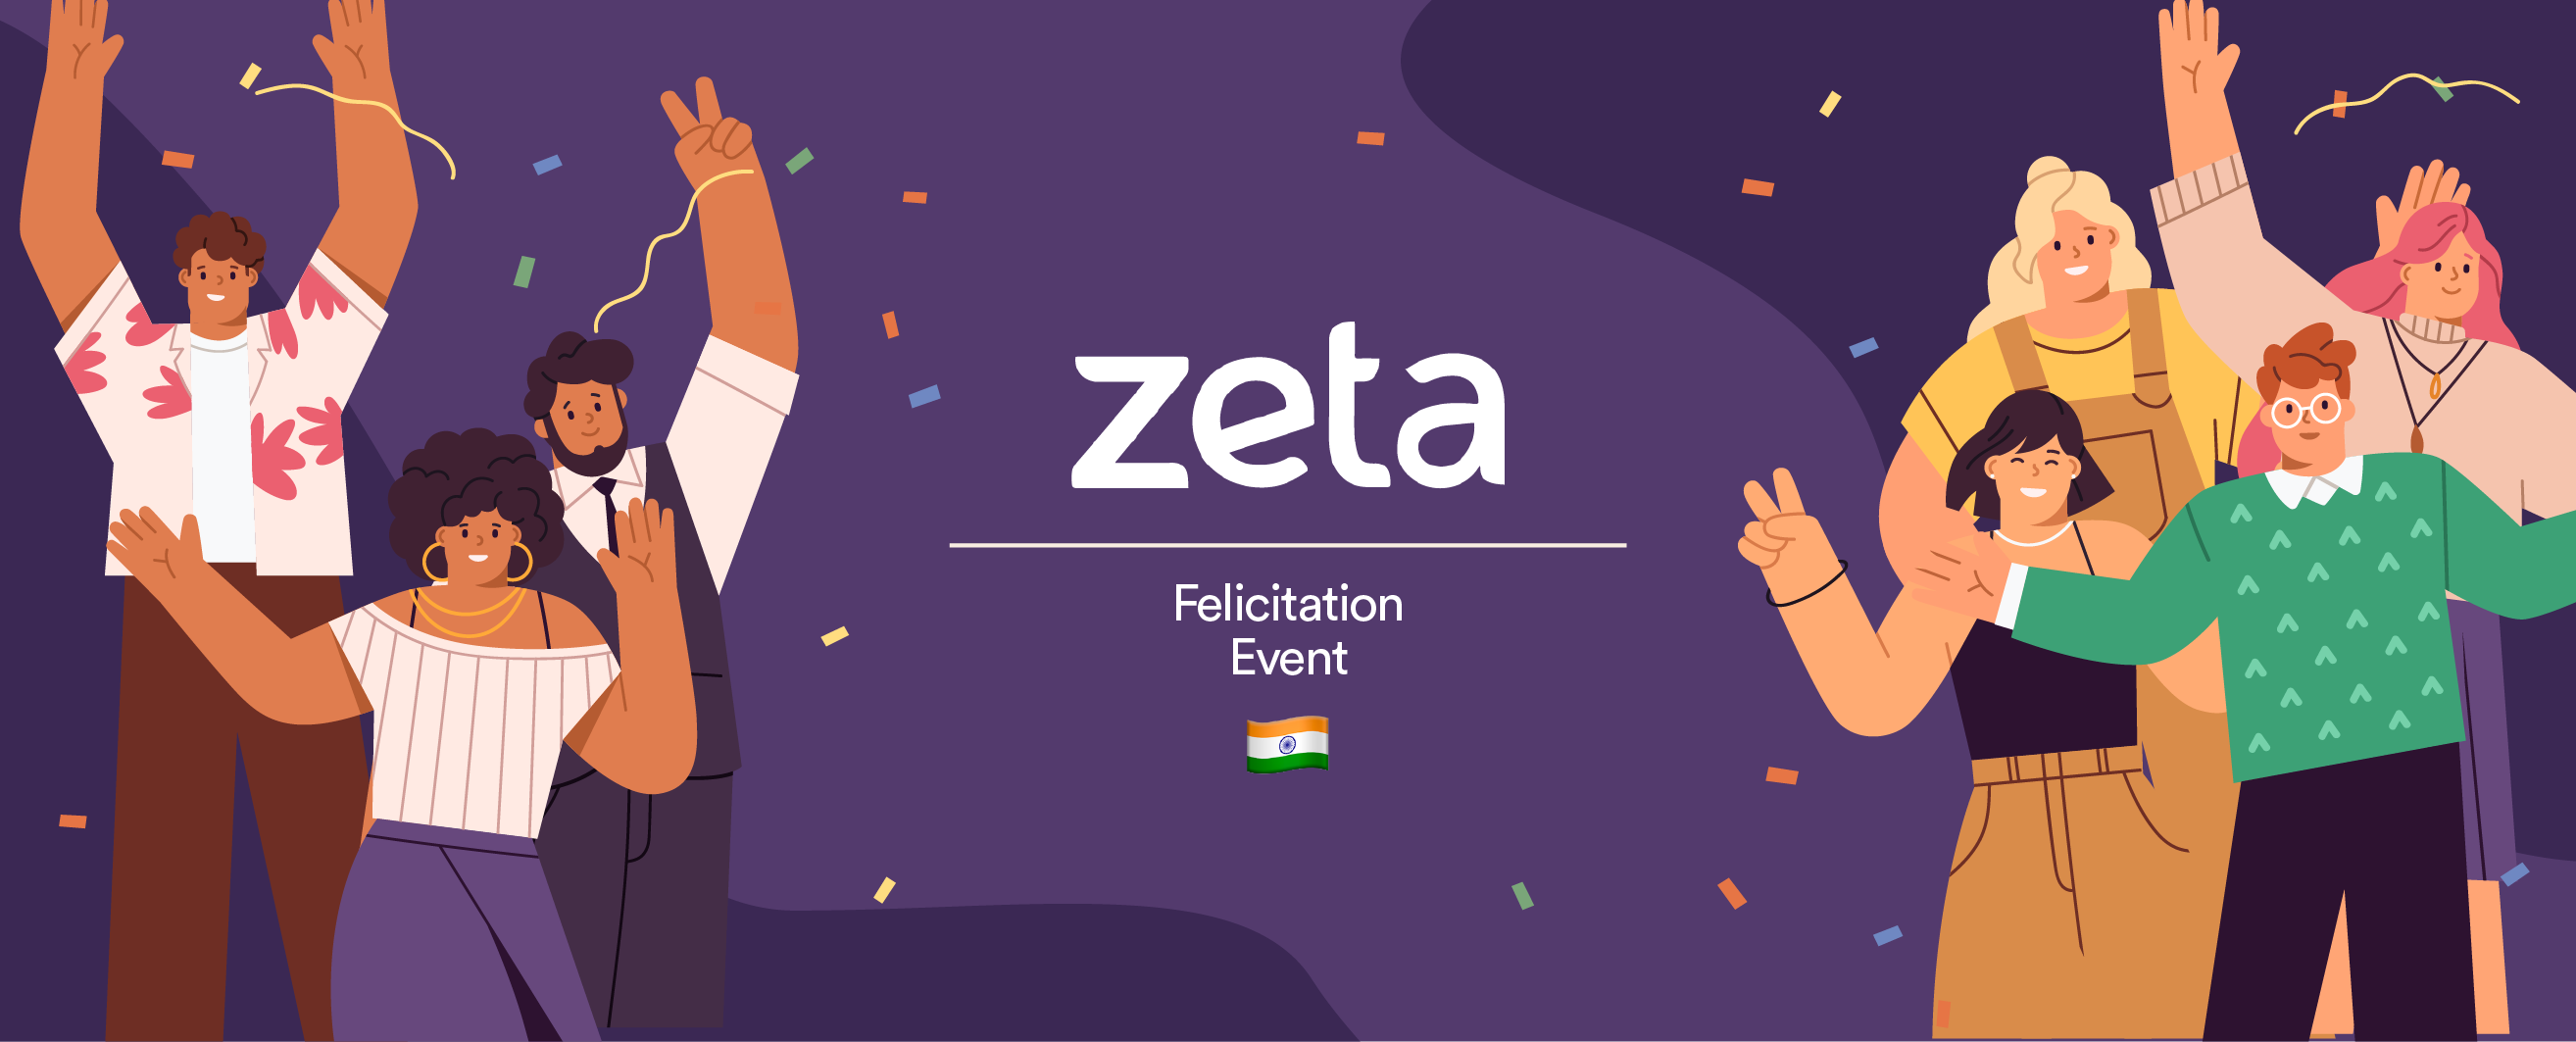 zeta felicitation event